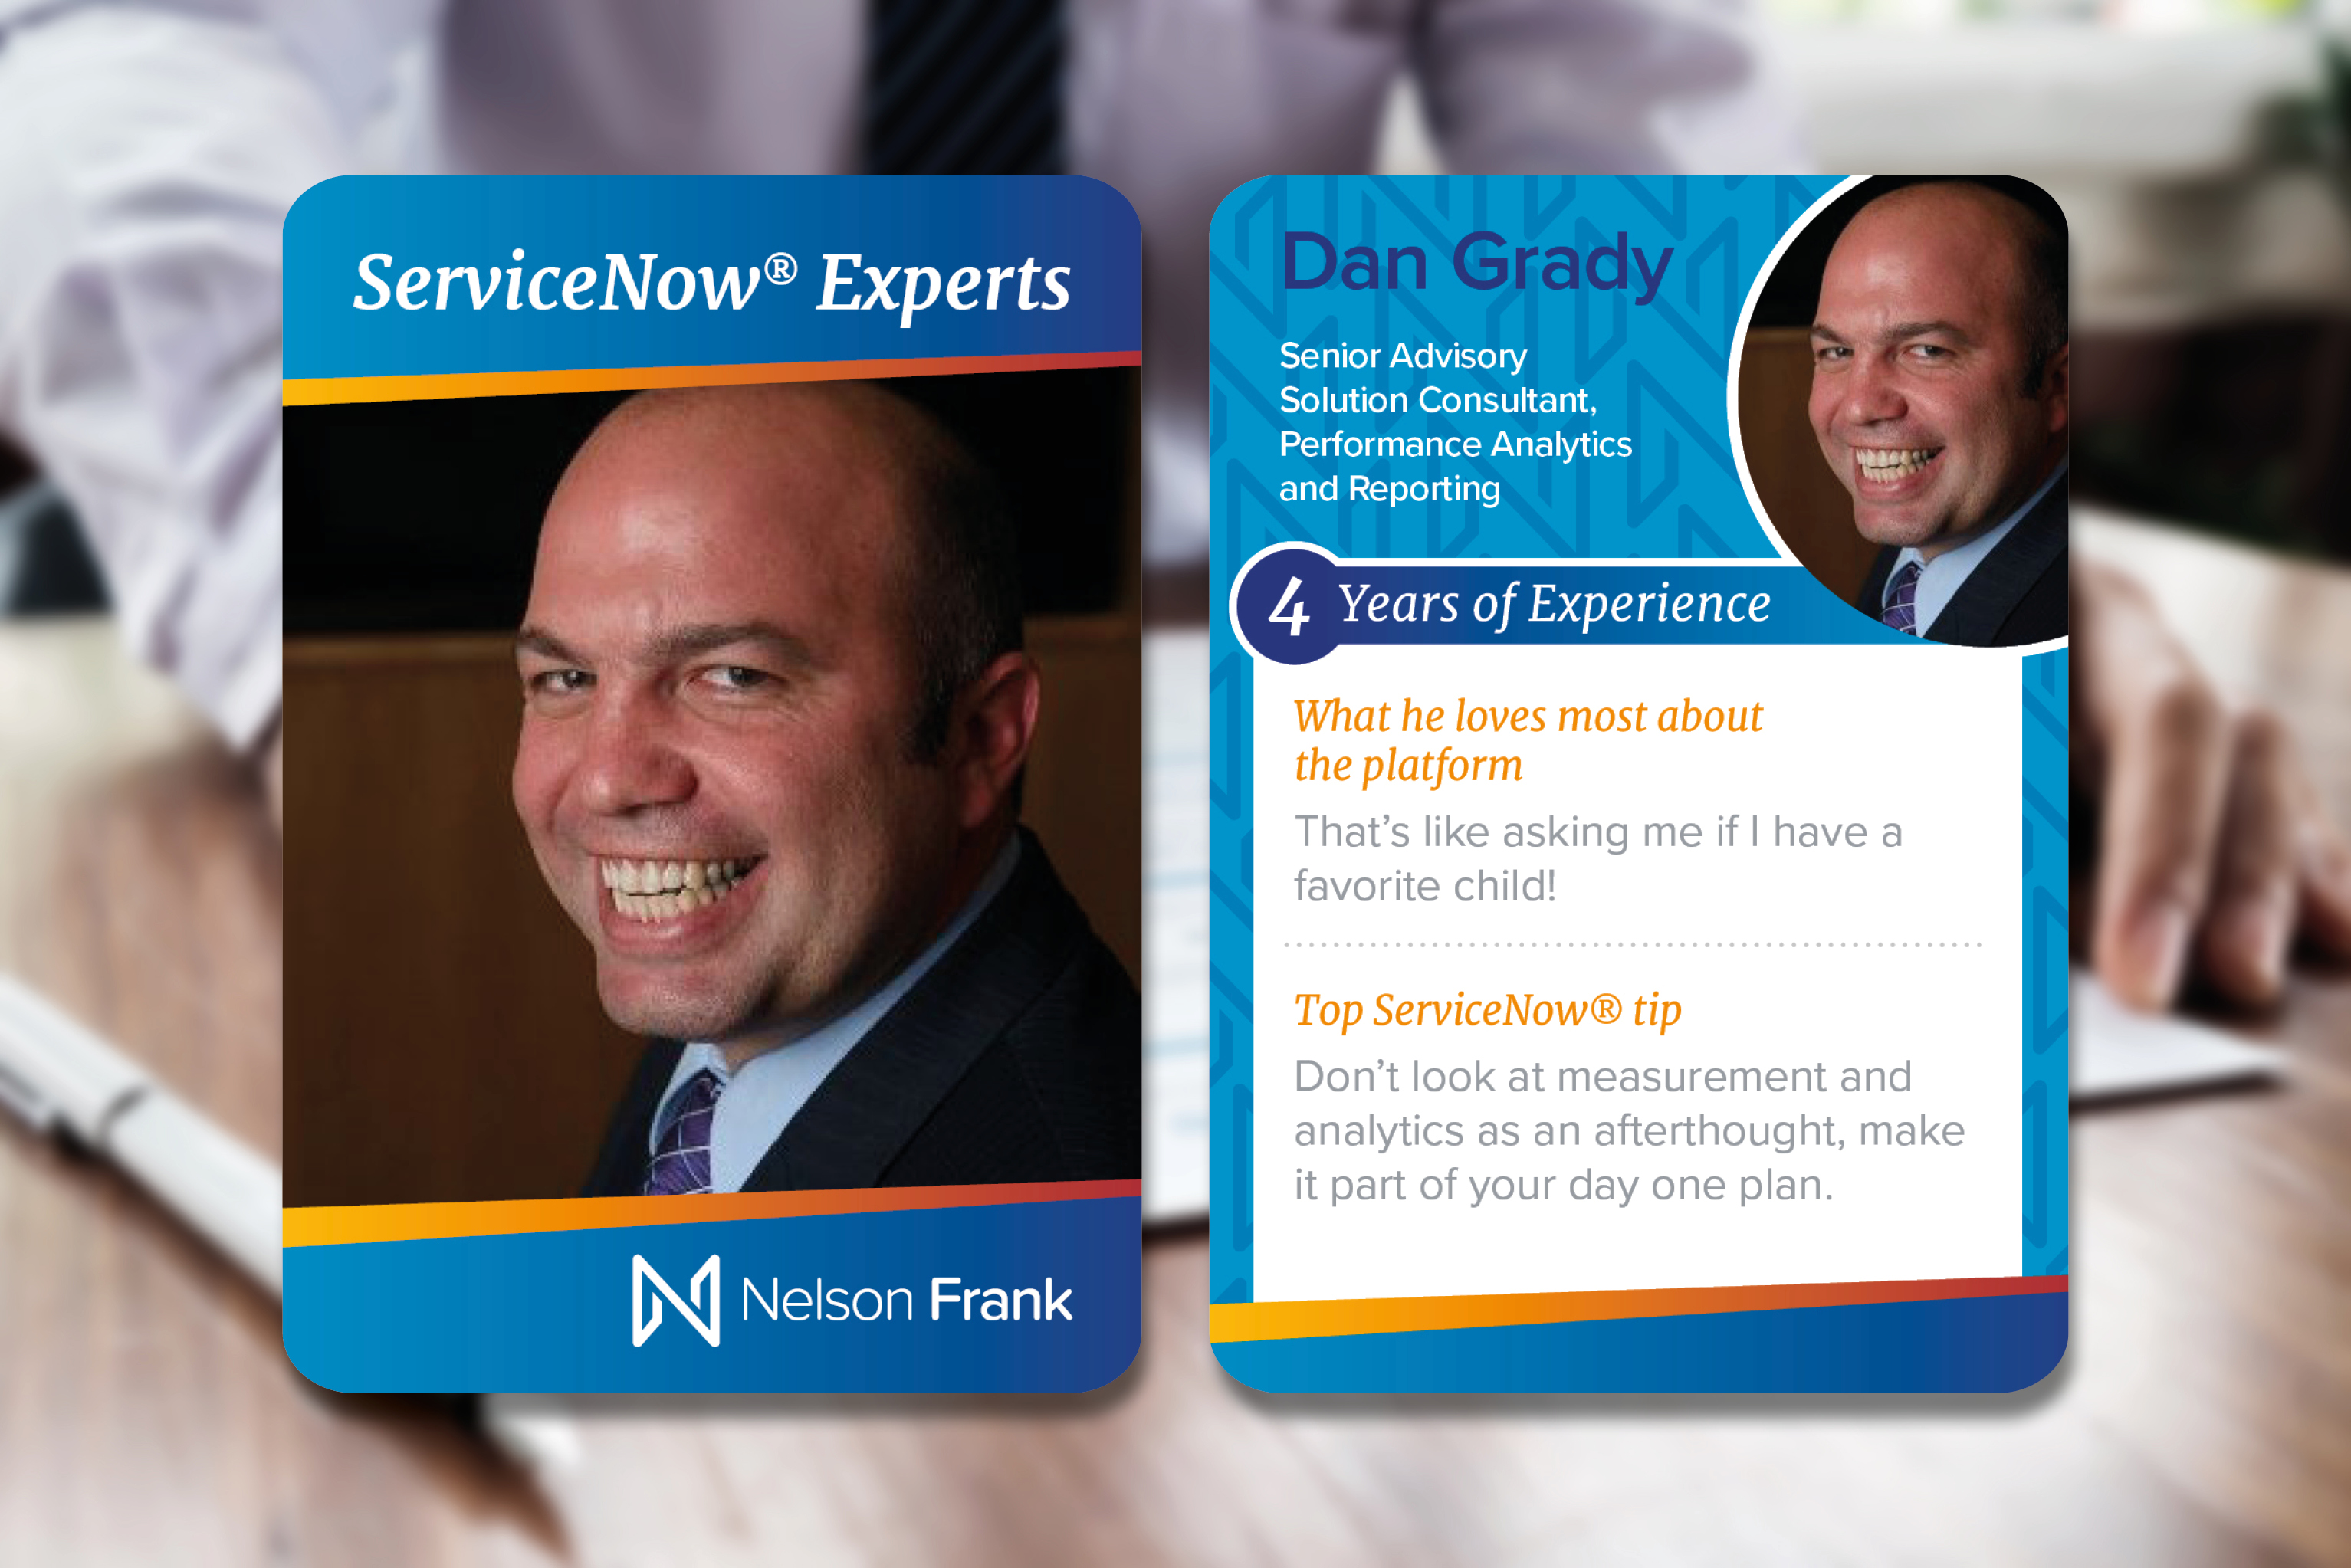 ServiceNow expert Dan Grady